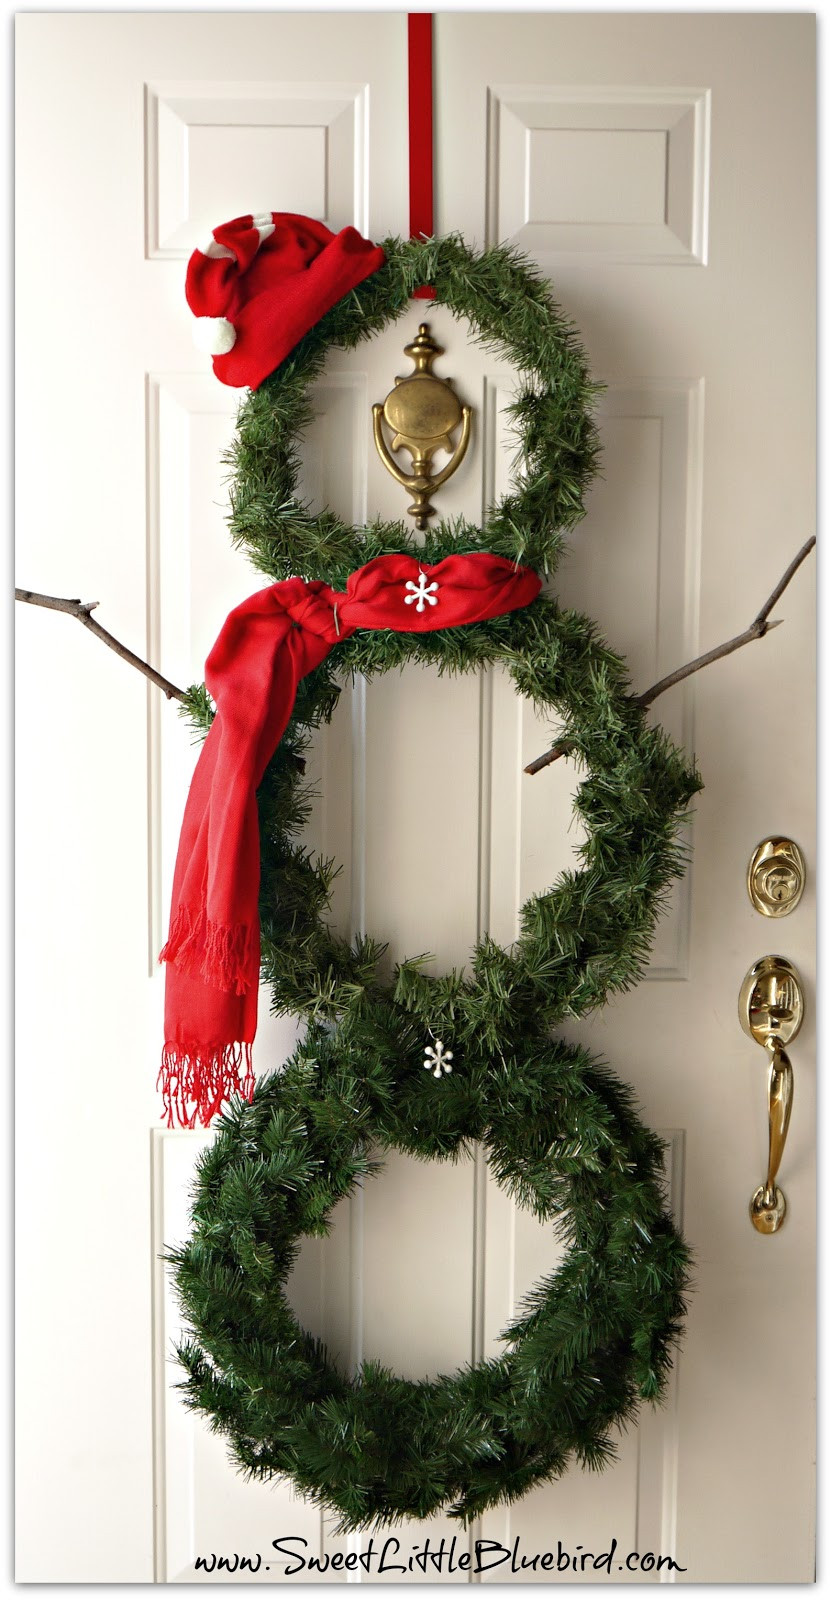 Best ideas about DIY Christmas Wreaths
. Save or Pin DIY Snowman Wreath Sweet Little Bluebird Now.